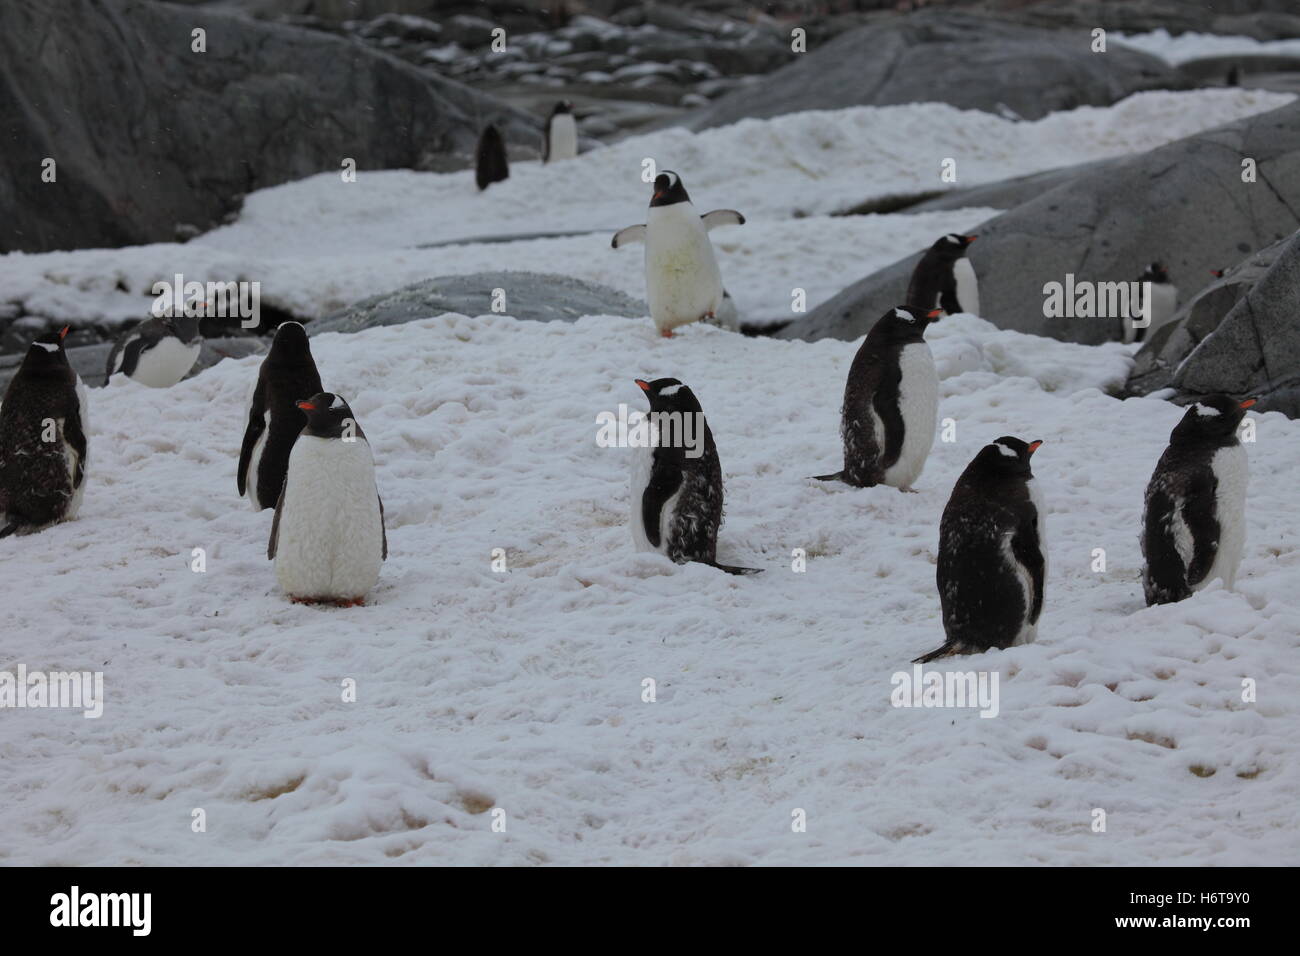 Winter, Kälte, Antarktis, Eis, Pinguin, Reisen, Winter, Tier, Vogel, Arktis  Stockfotografie - Alamy